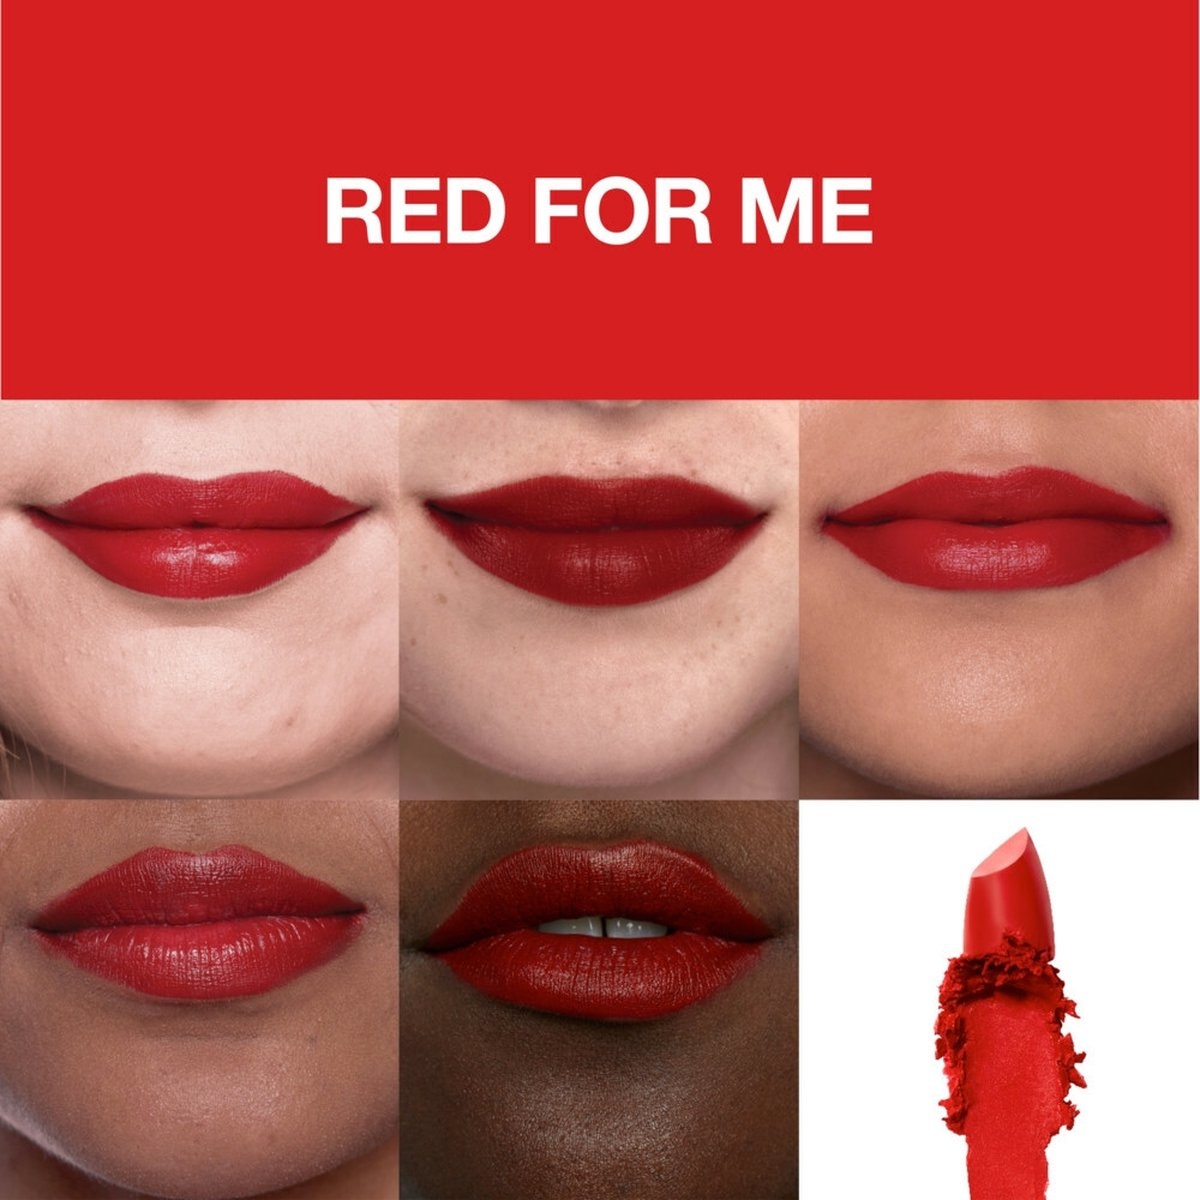 Rouge à lèvres Color Sensational Made For All de Maybelline - 382 Red For Me - Rouge mat